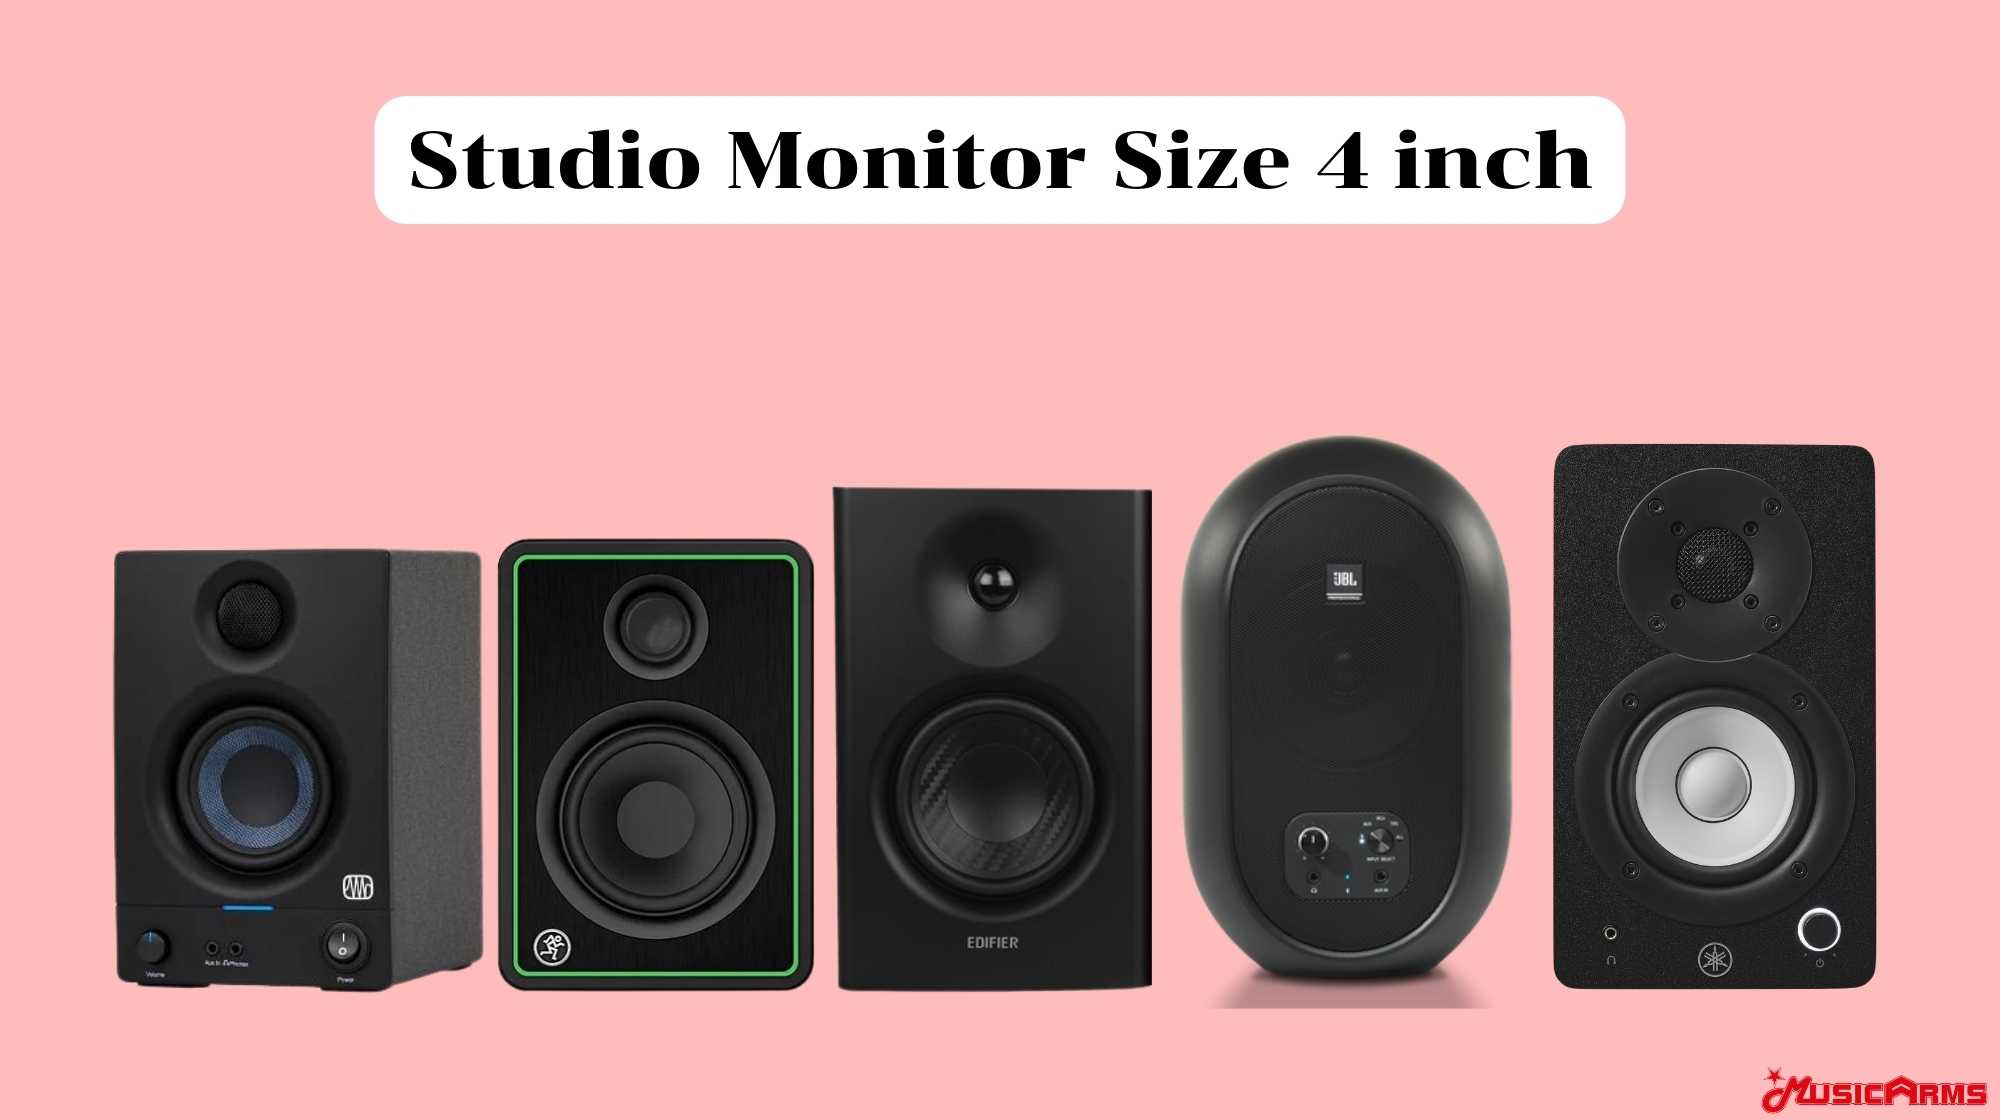 Studio Monitor Size 4 inch